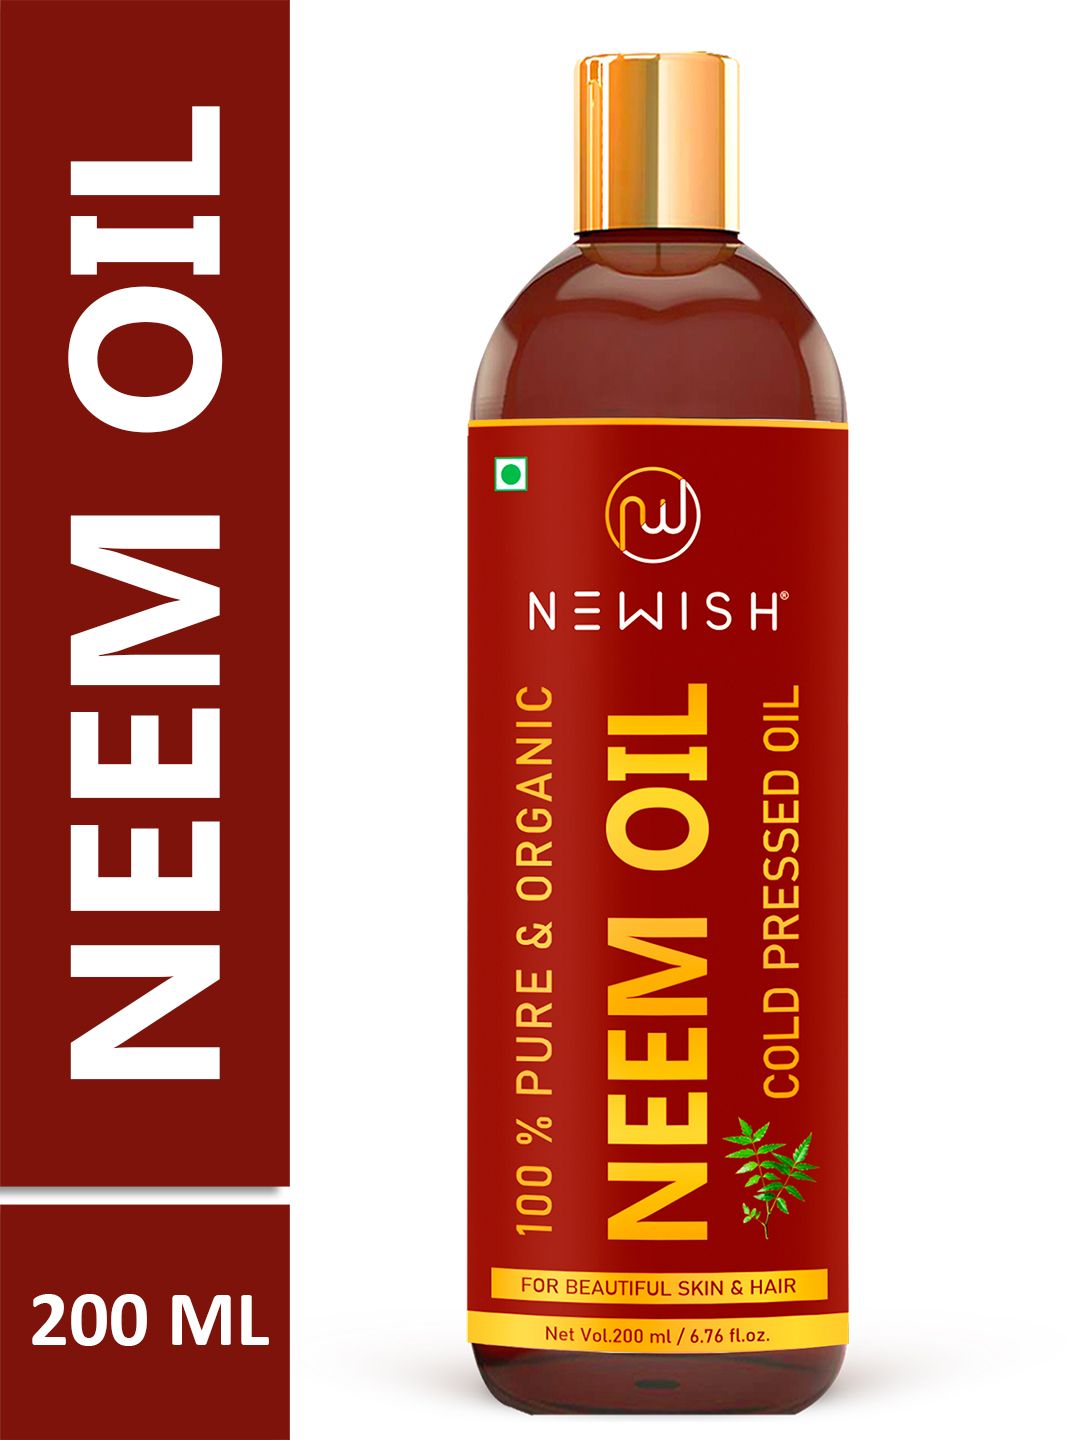 NEWISH Cold Pressed Organic Neem Oil- 200 ML Price in India